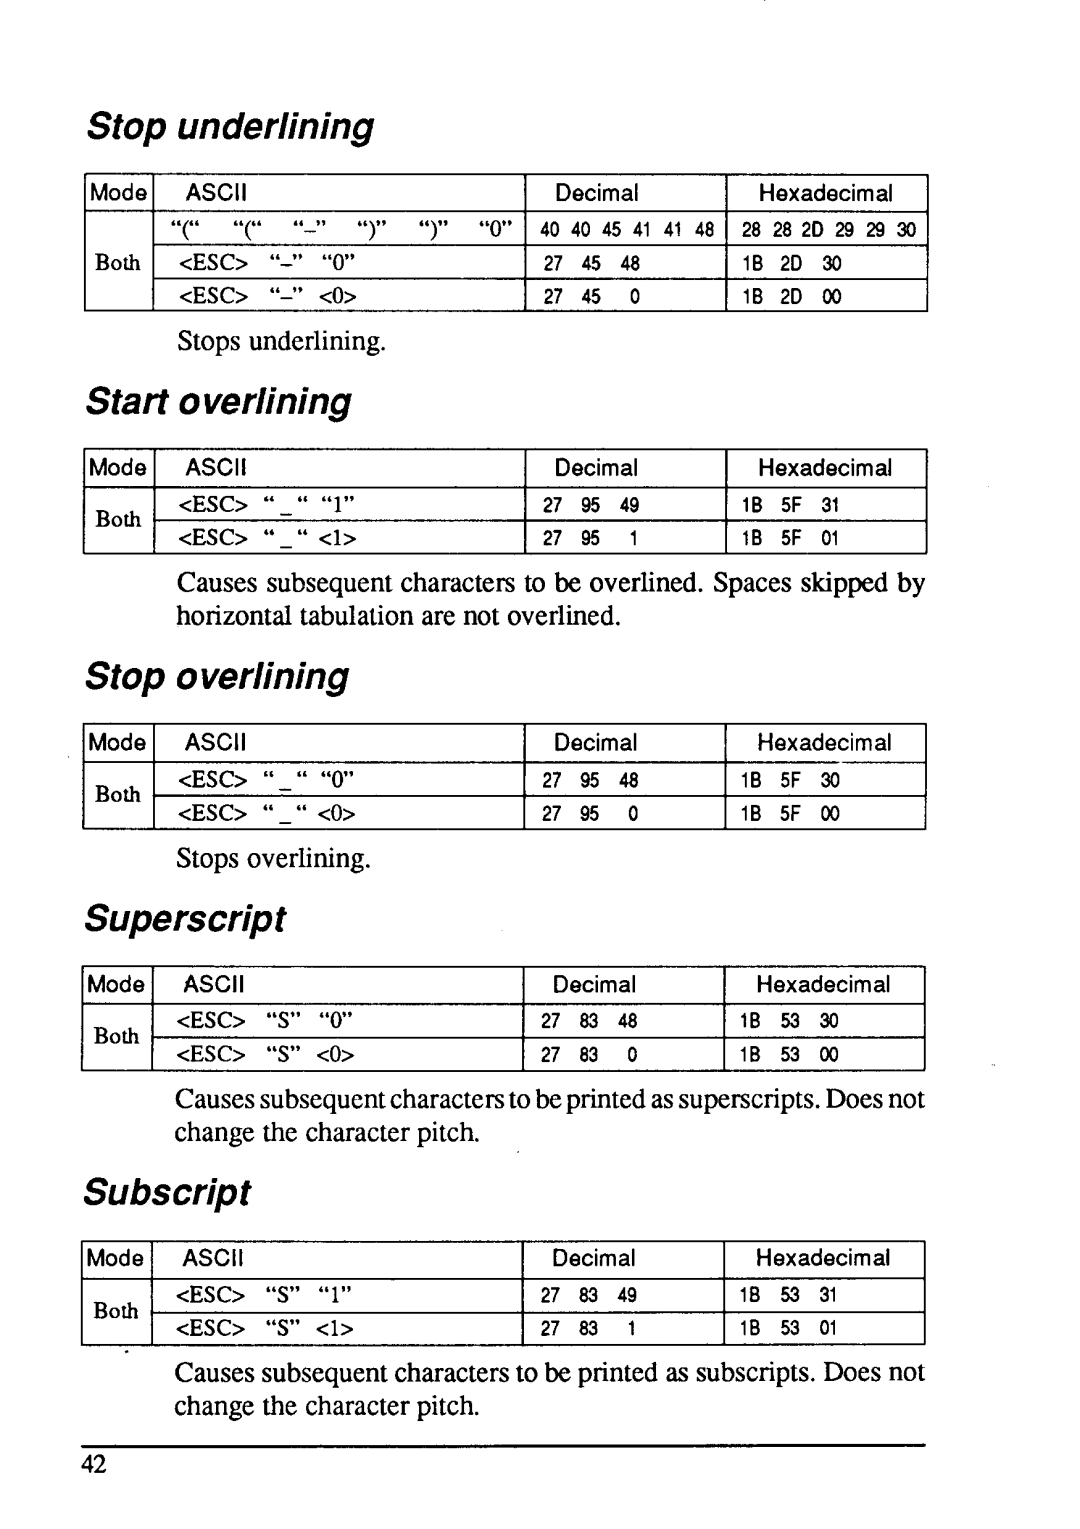 Star Micronics LC24-15 user manual Stop underlining, Start 0 verlining, Stop 0 verlining, Superscript, Subscript 